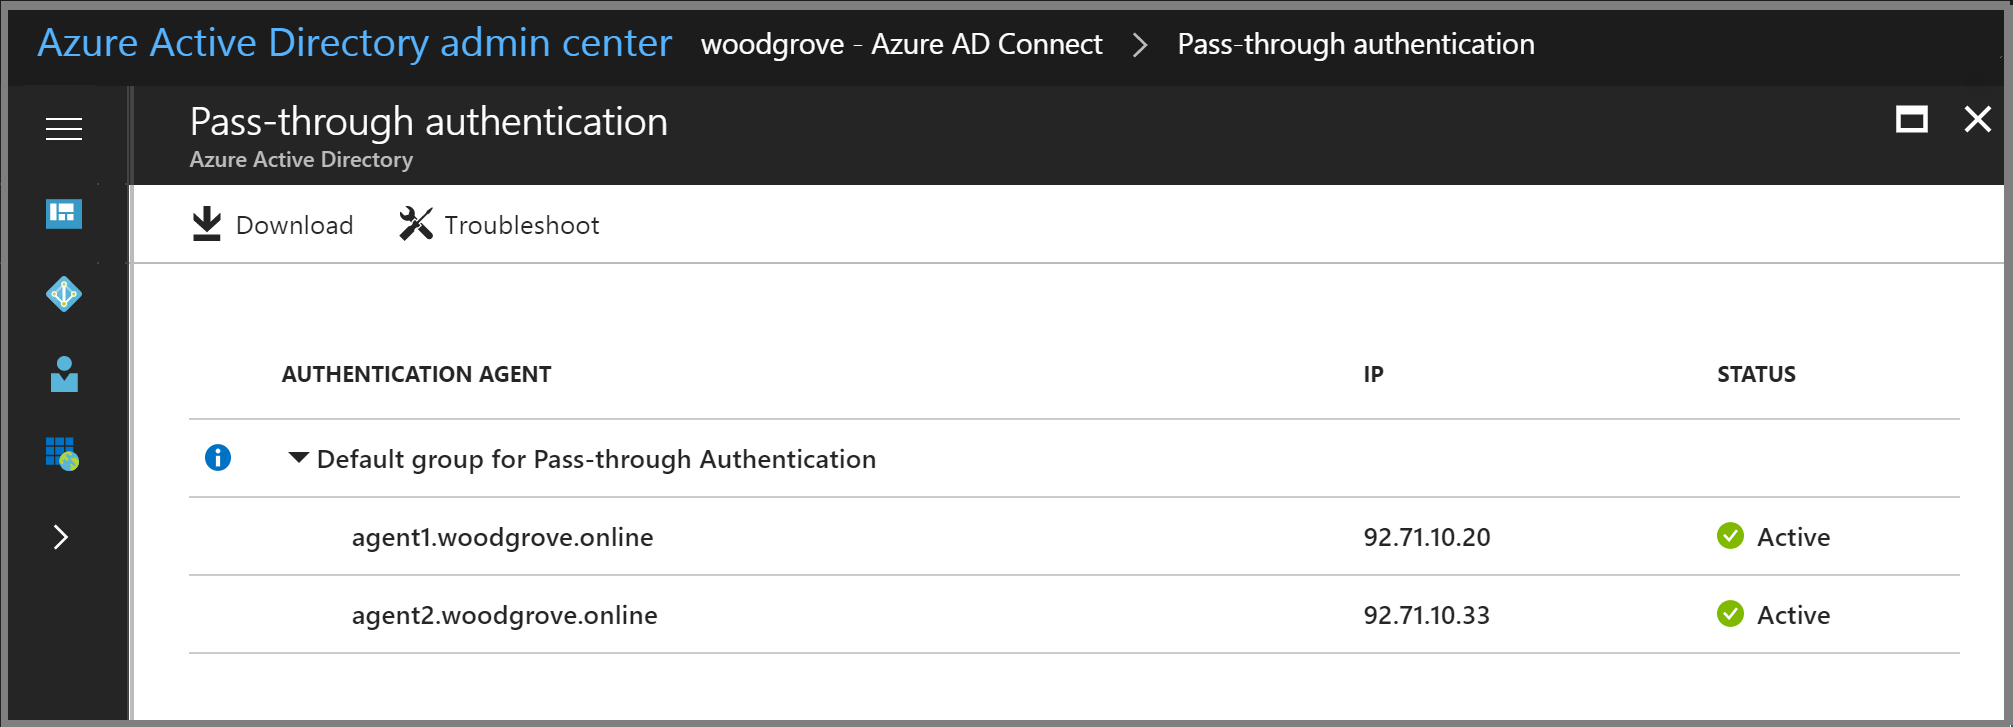 Azure Active Directory admin center: Pass-through Authentication pane